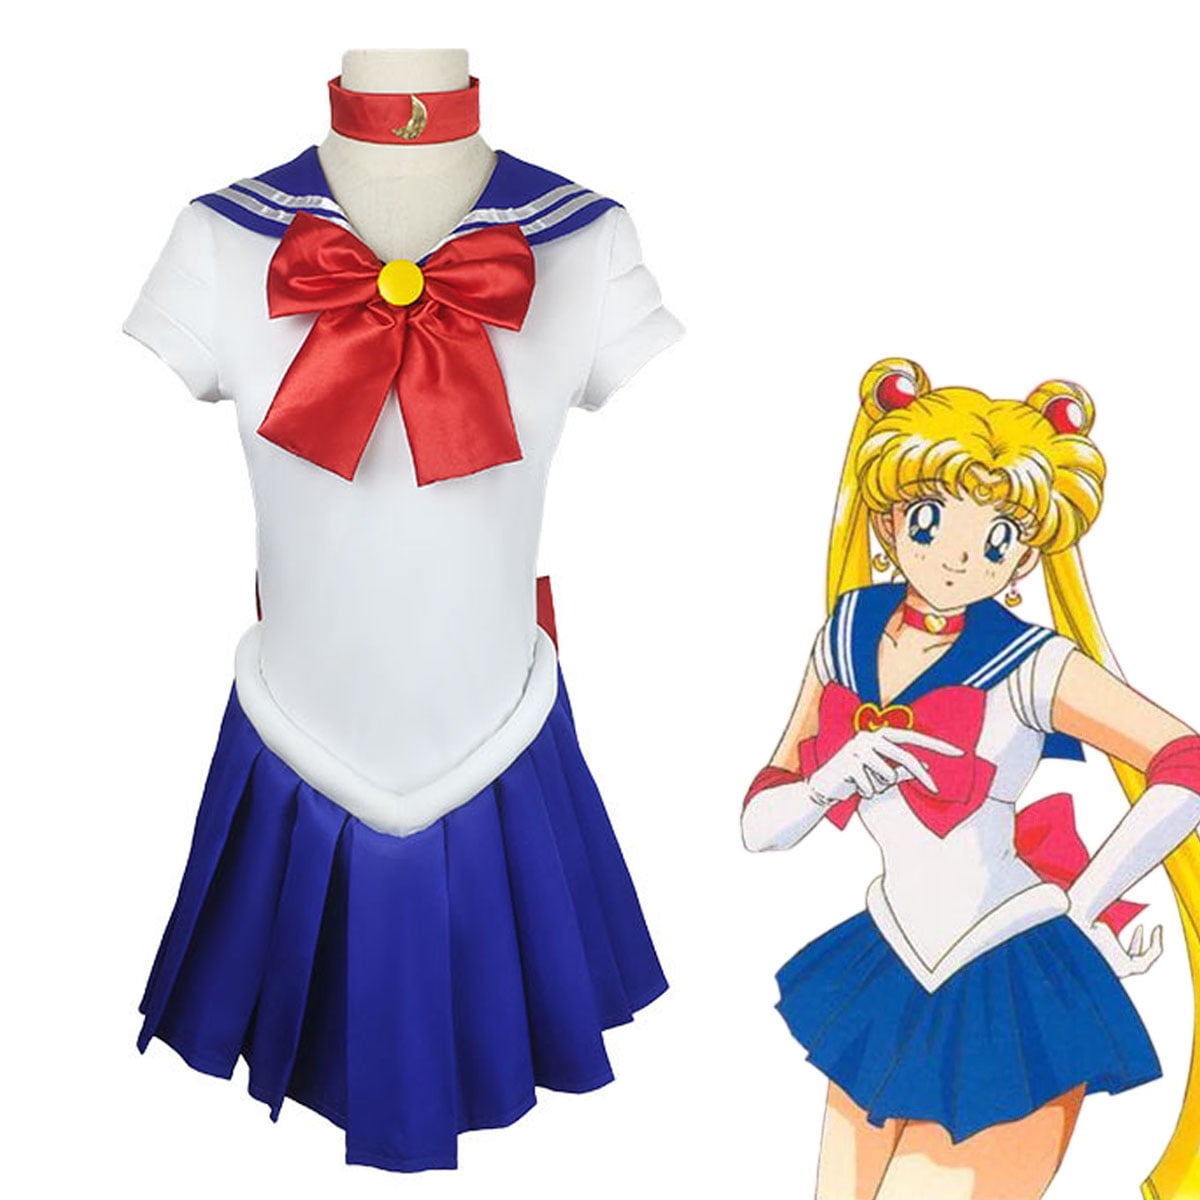 Sailor moon costume dolls kill